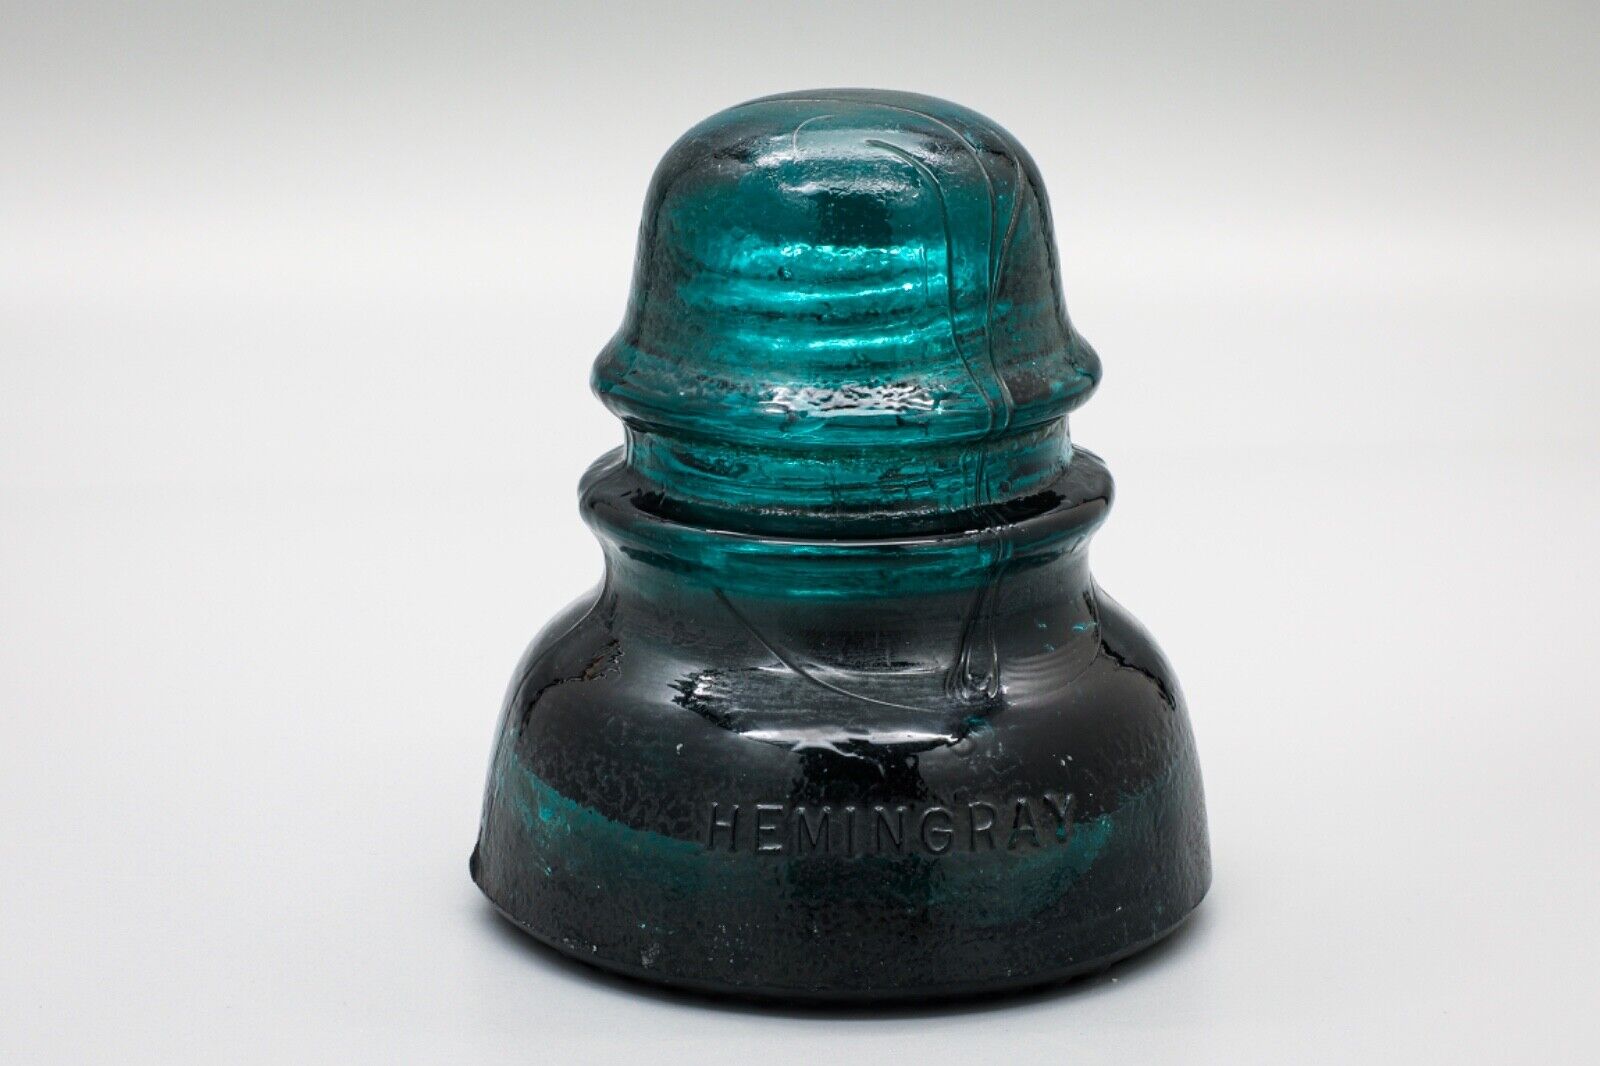 Hemingray Glass Insulator - No 40 - Green - Made in USA. Vintage insulator.